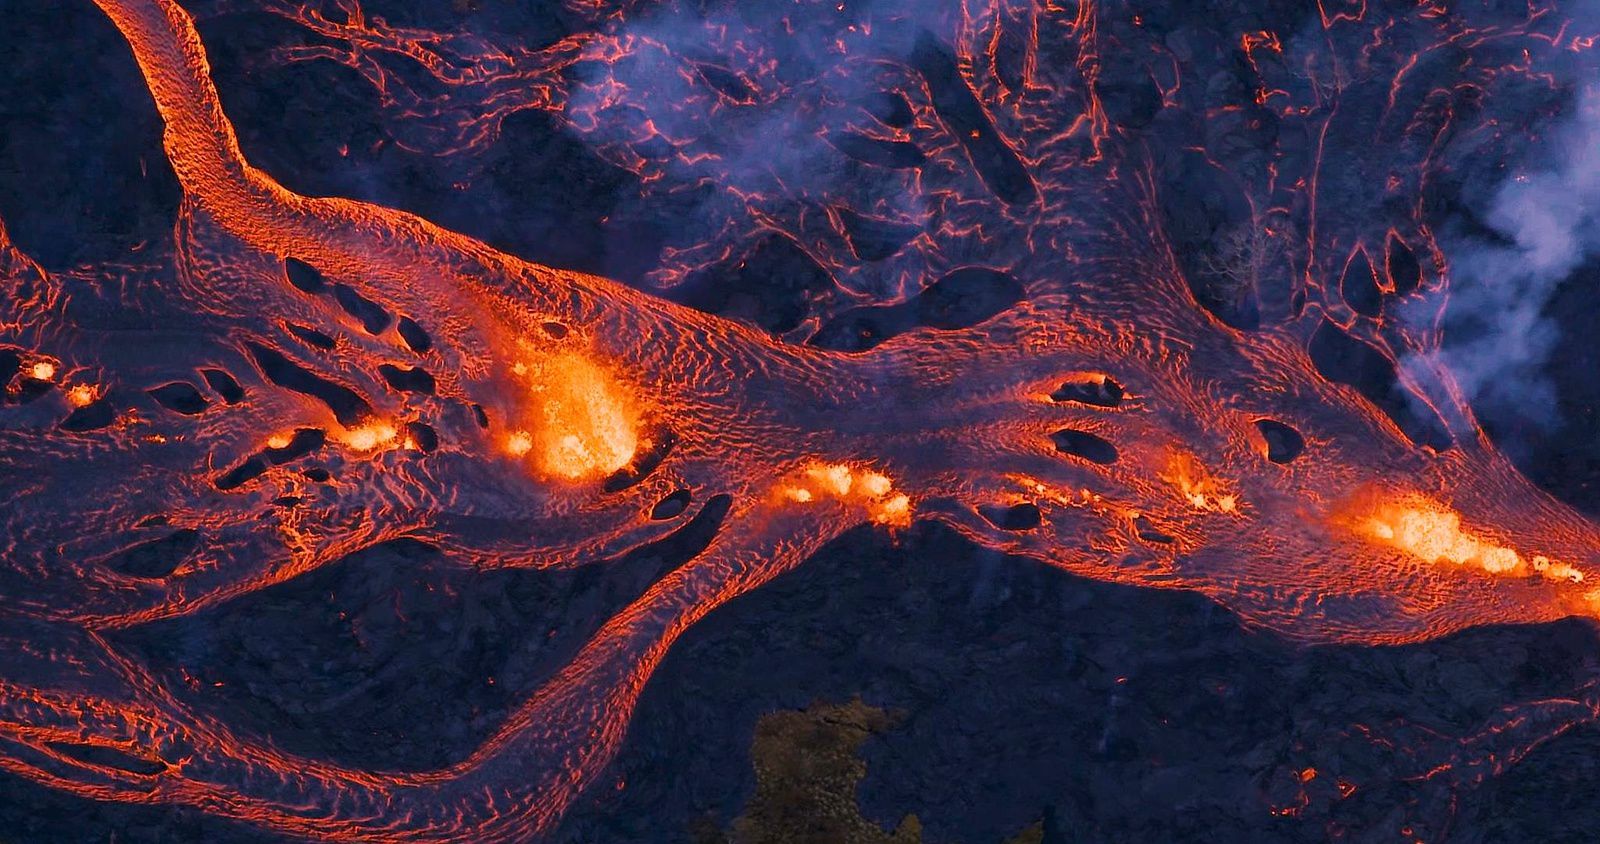 Kilauea East Rift Zone - A Hydra of Lava - Photo Mick Kalber